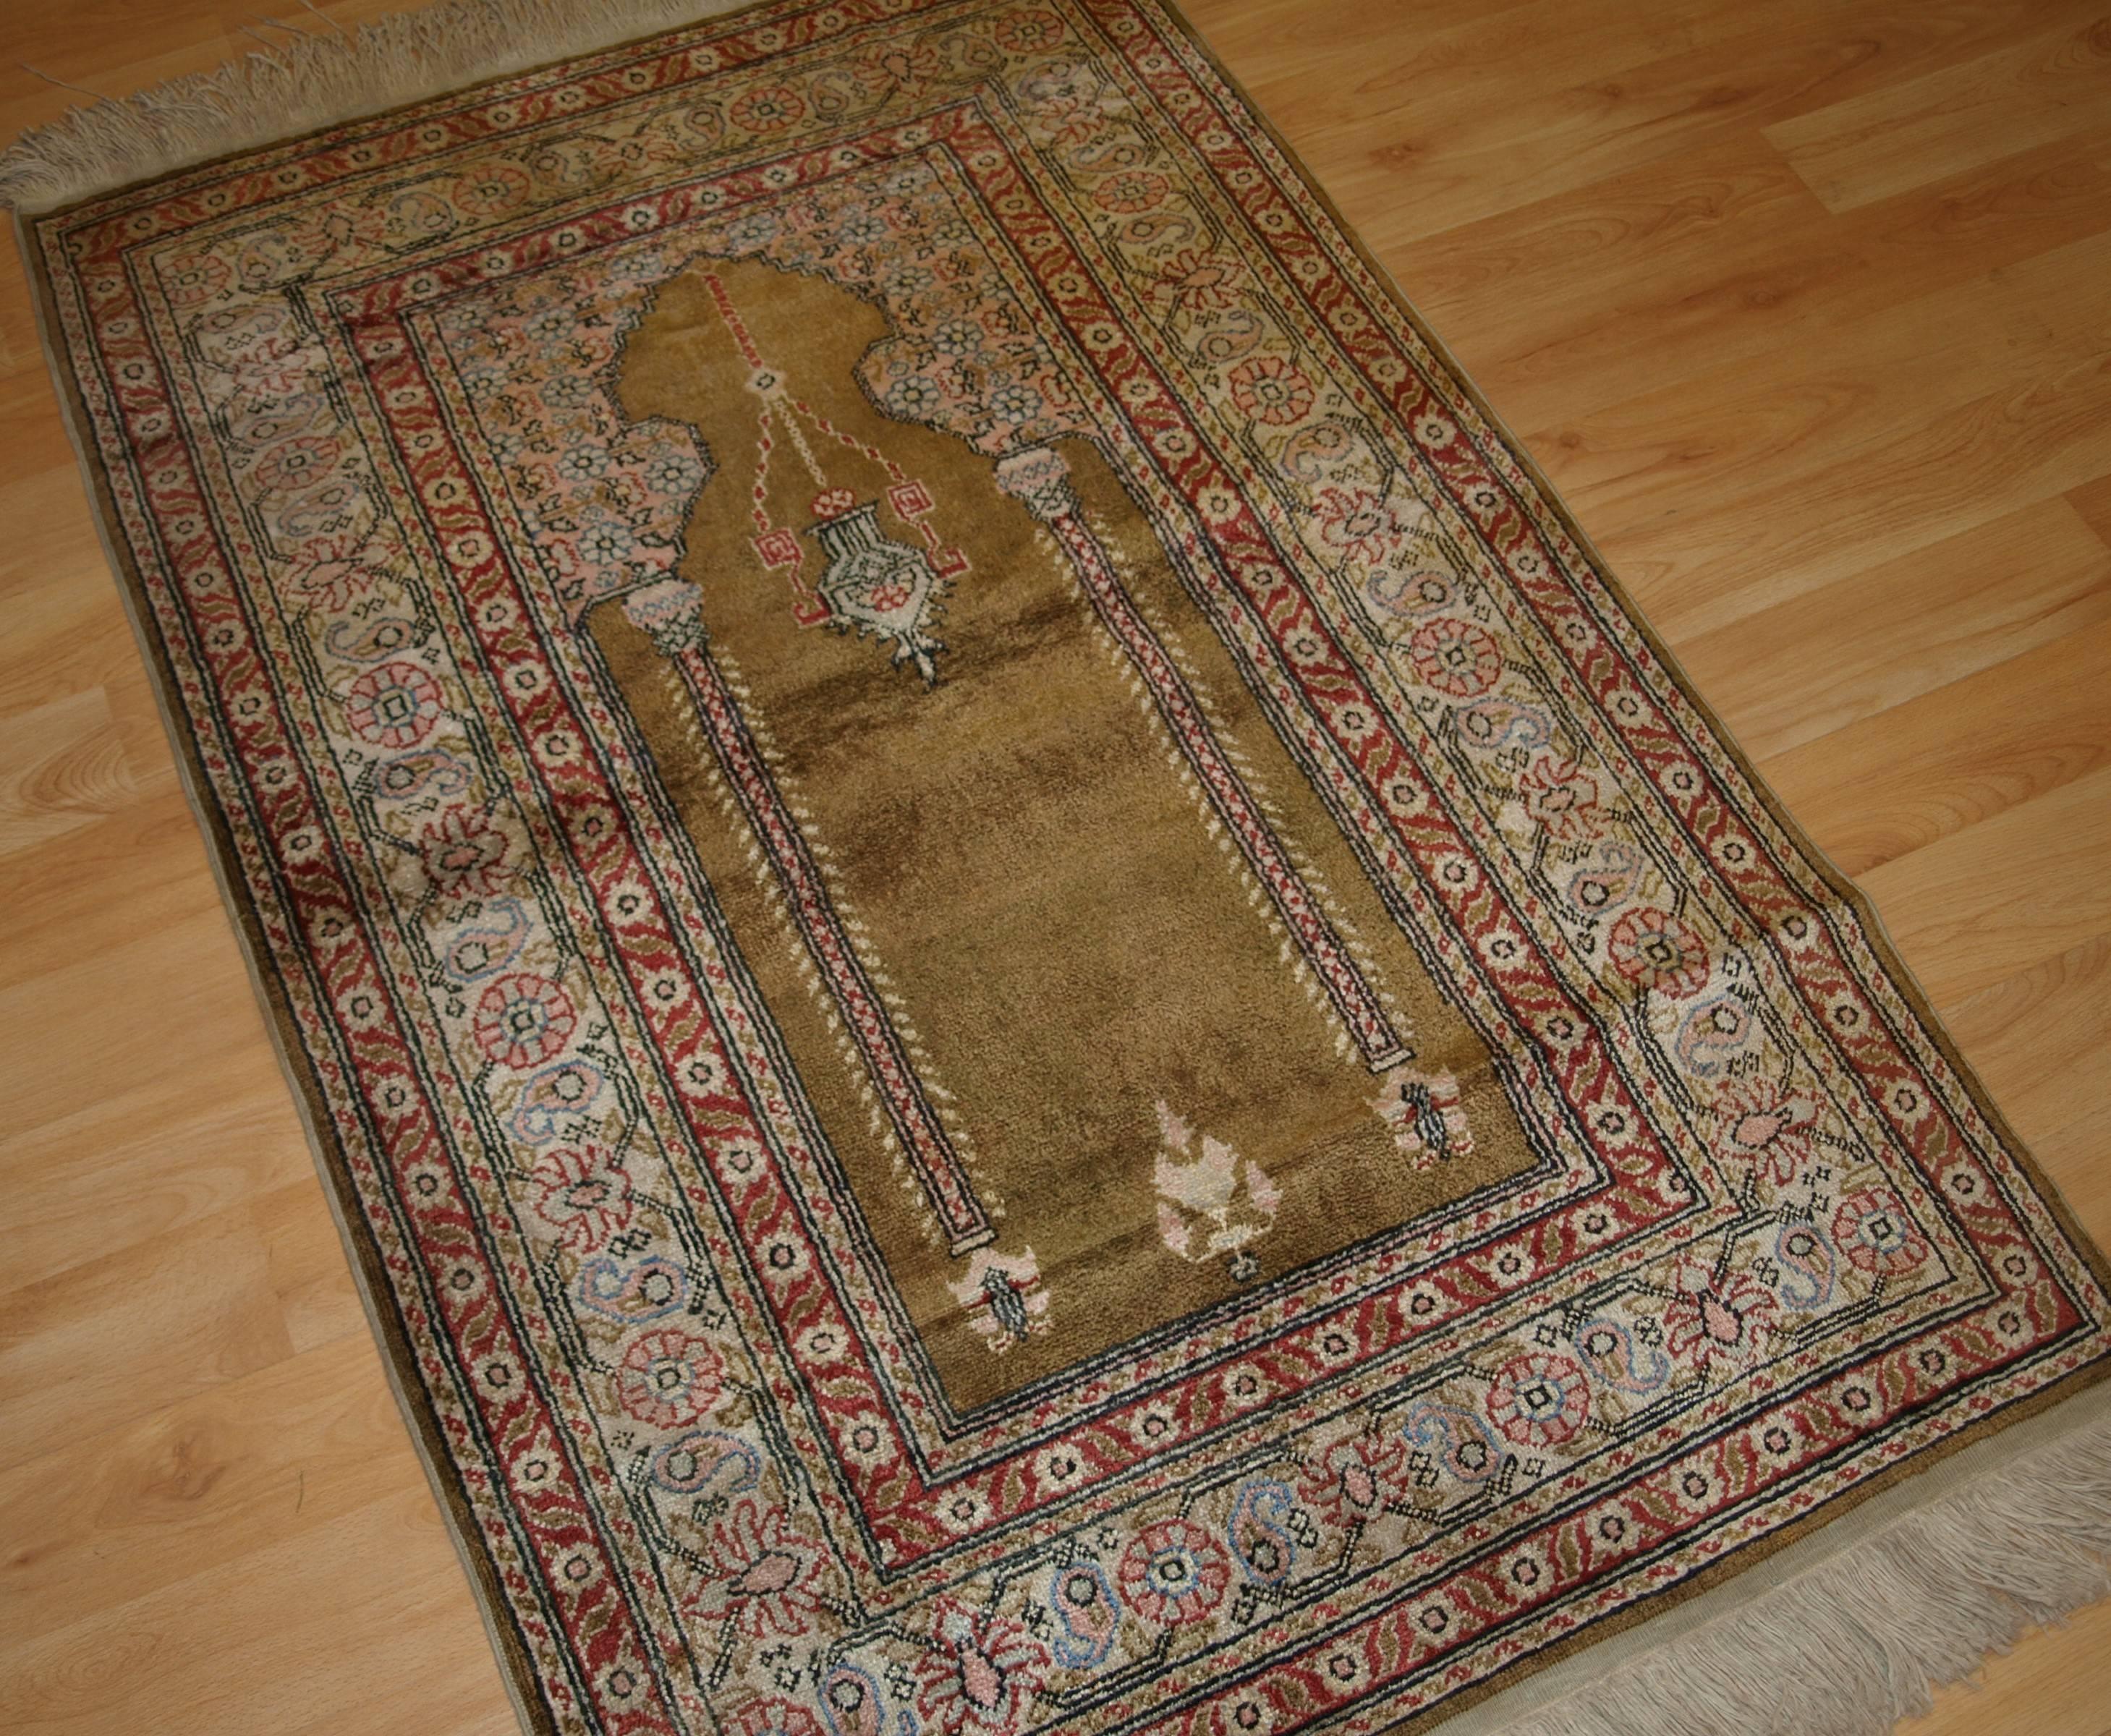 Old Turkish Kayseri 'art silk' prayer rug, traditional prayer design, good colors, circa 1920-1930.
Size: 4ft 7in x 3ft 0in (140 x 92cm).

Antique Anatolian Kayseri 'art silk' prayer rug, beautifully drawn with a traditional Turkish mosque prayer